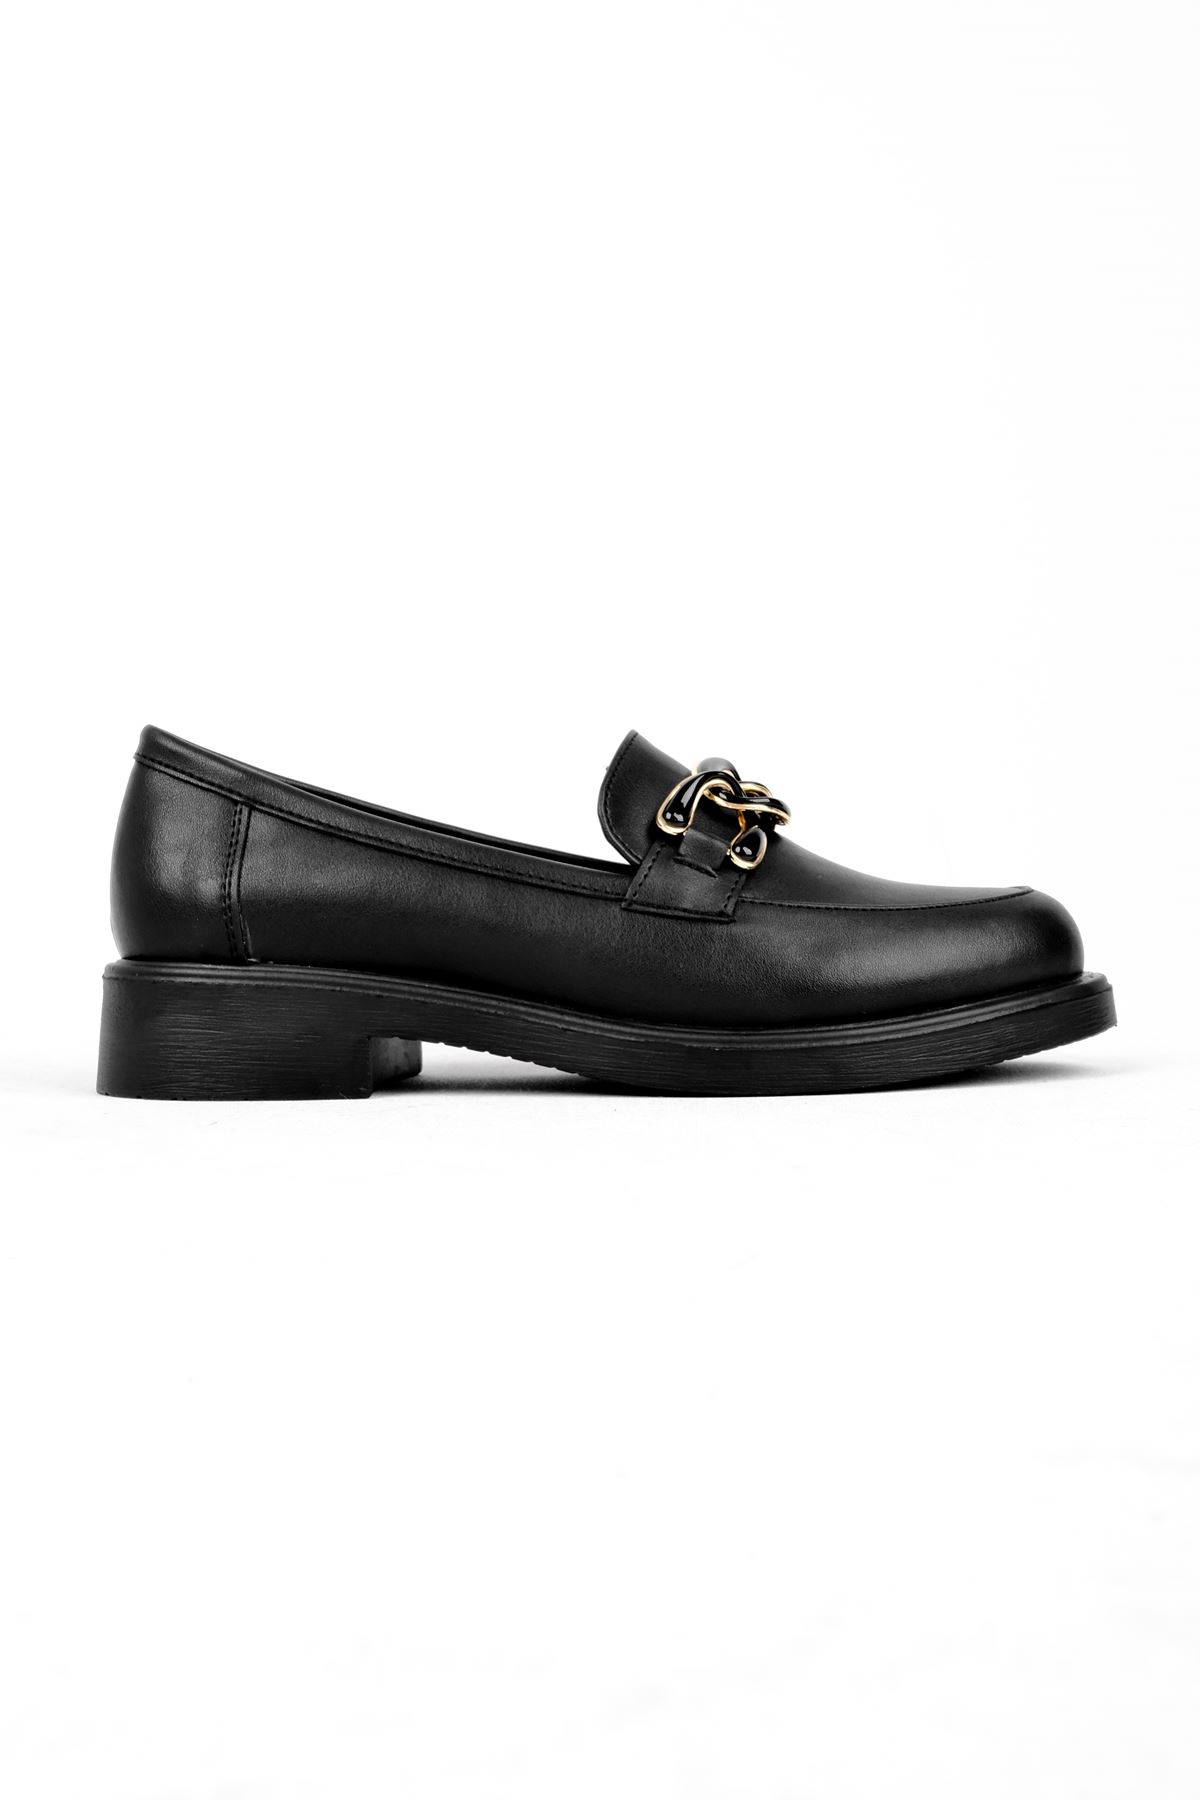 Ponte Yuvarlak Metal Oxford Kadın Ayakkabı-siyah